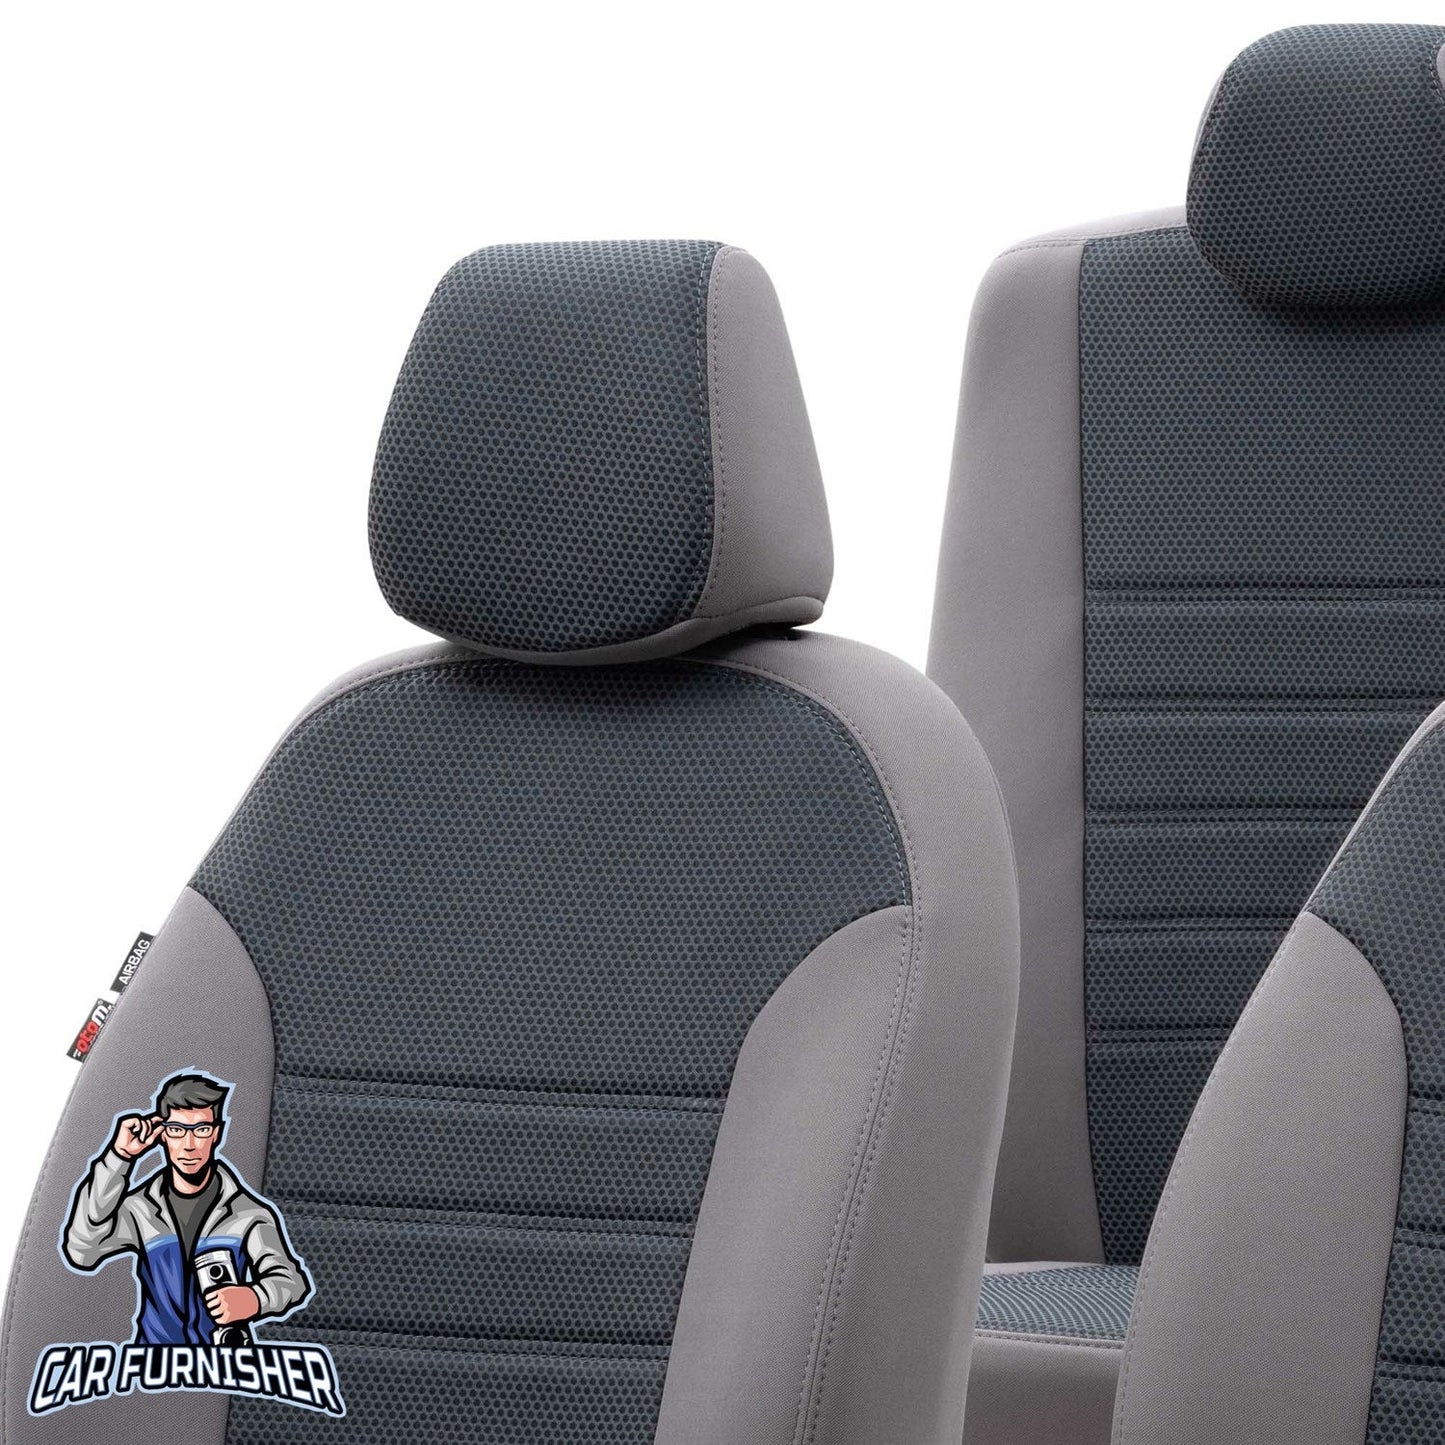 Volkswagen Transporter Seat Cover Original Jacquard Design Smoked Jacquard Fabric